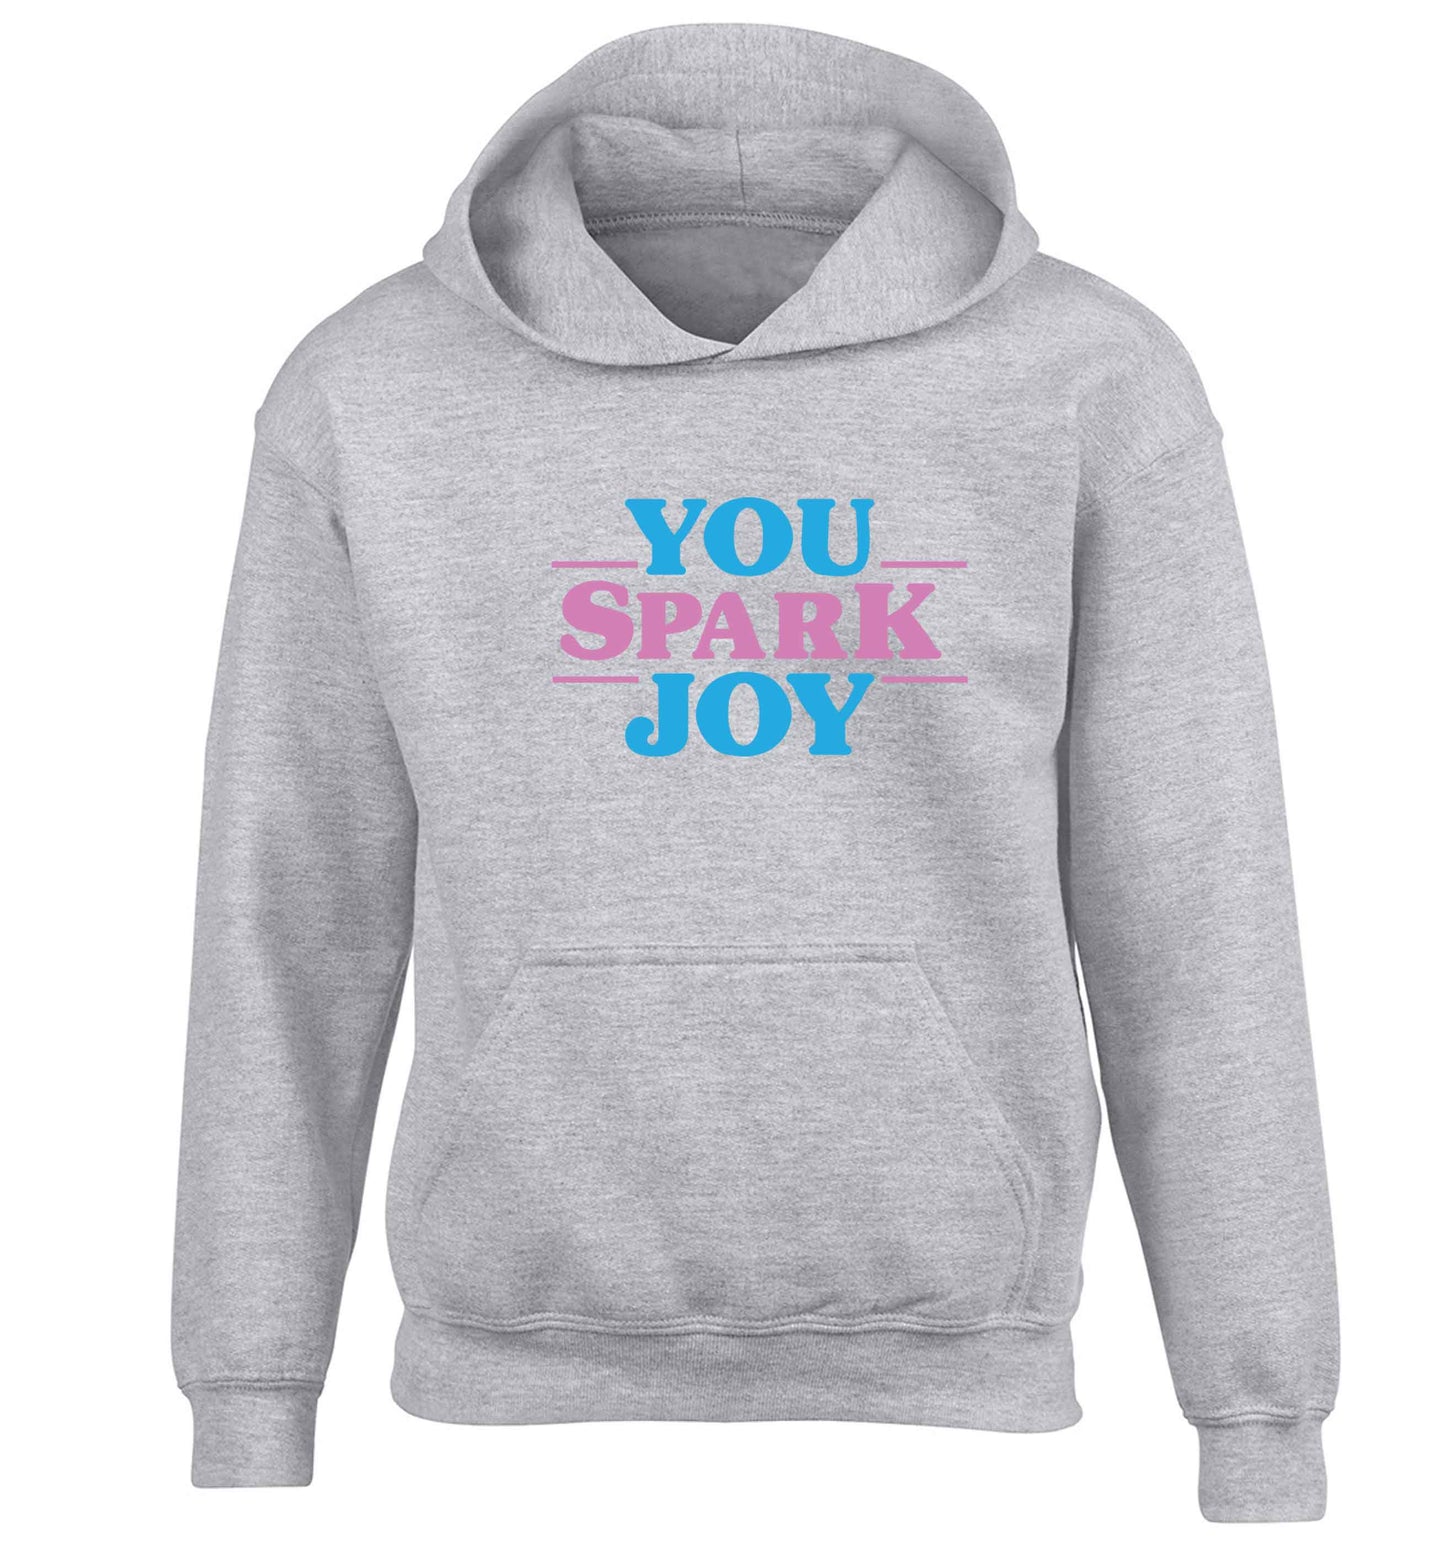 You spark joy children's grey hoodie 12-13 Years